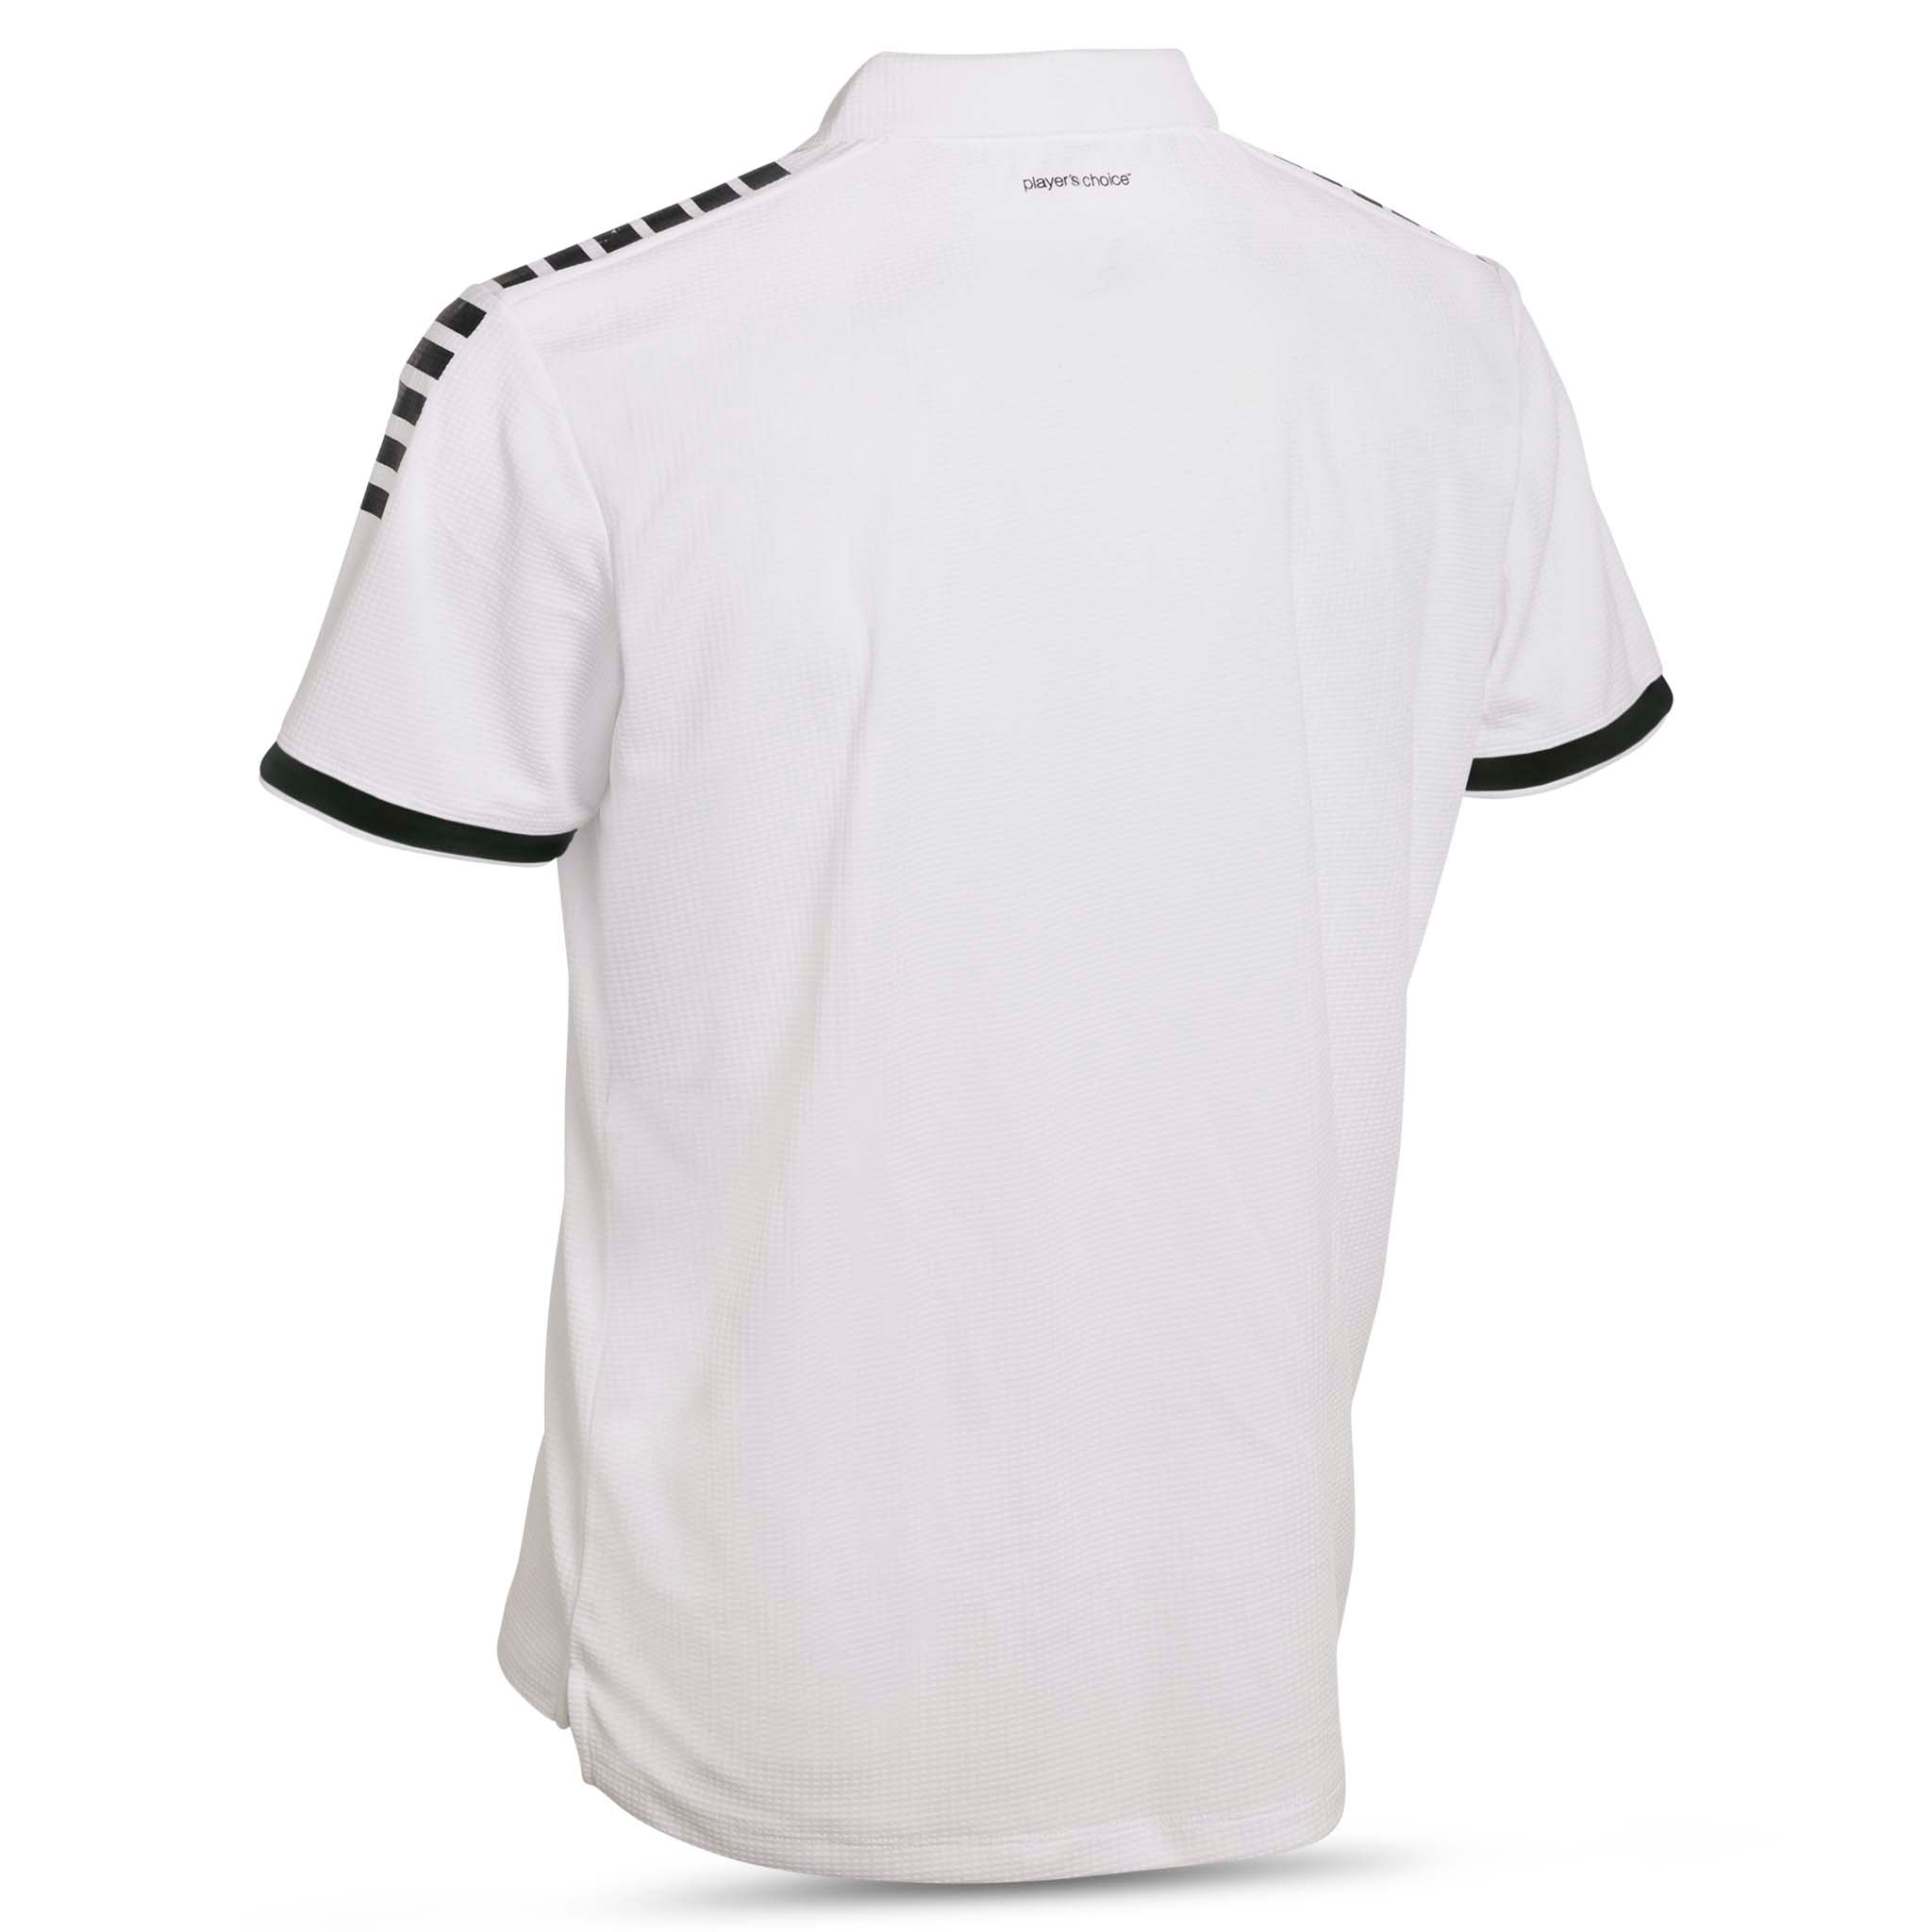 Technical Polo shirt - Monaco #colour_white